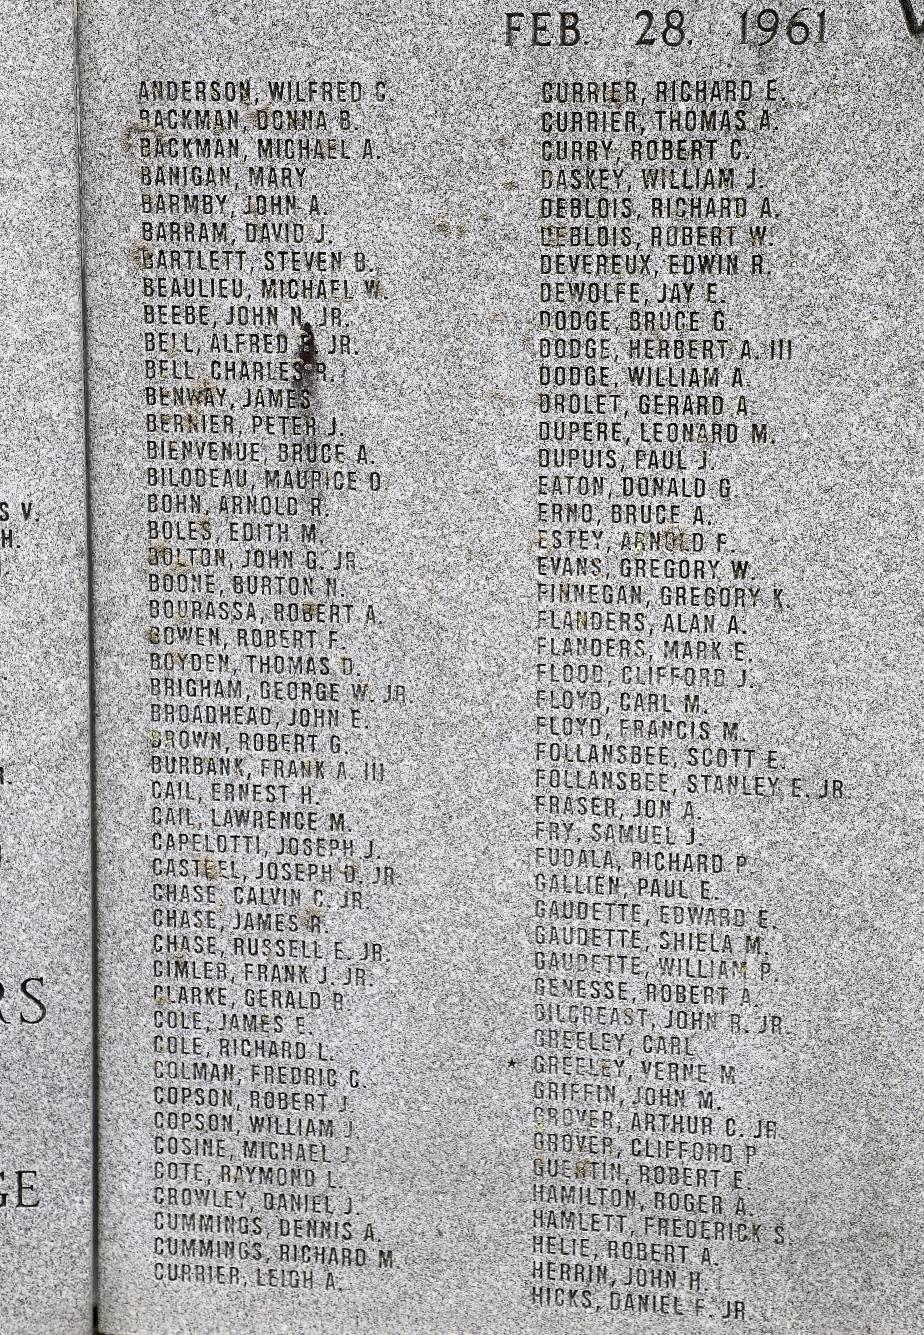 Londonderry New Hampshire Vietnam War Veterans Memorial